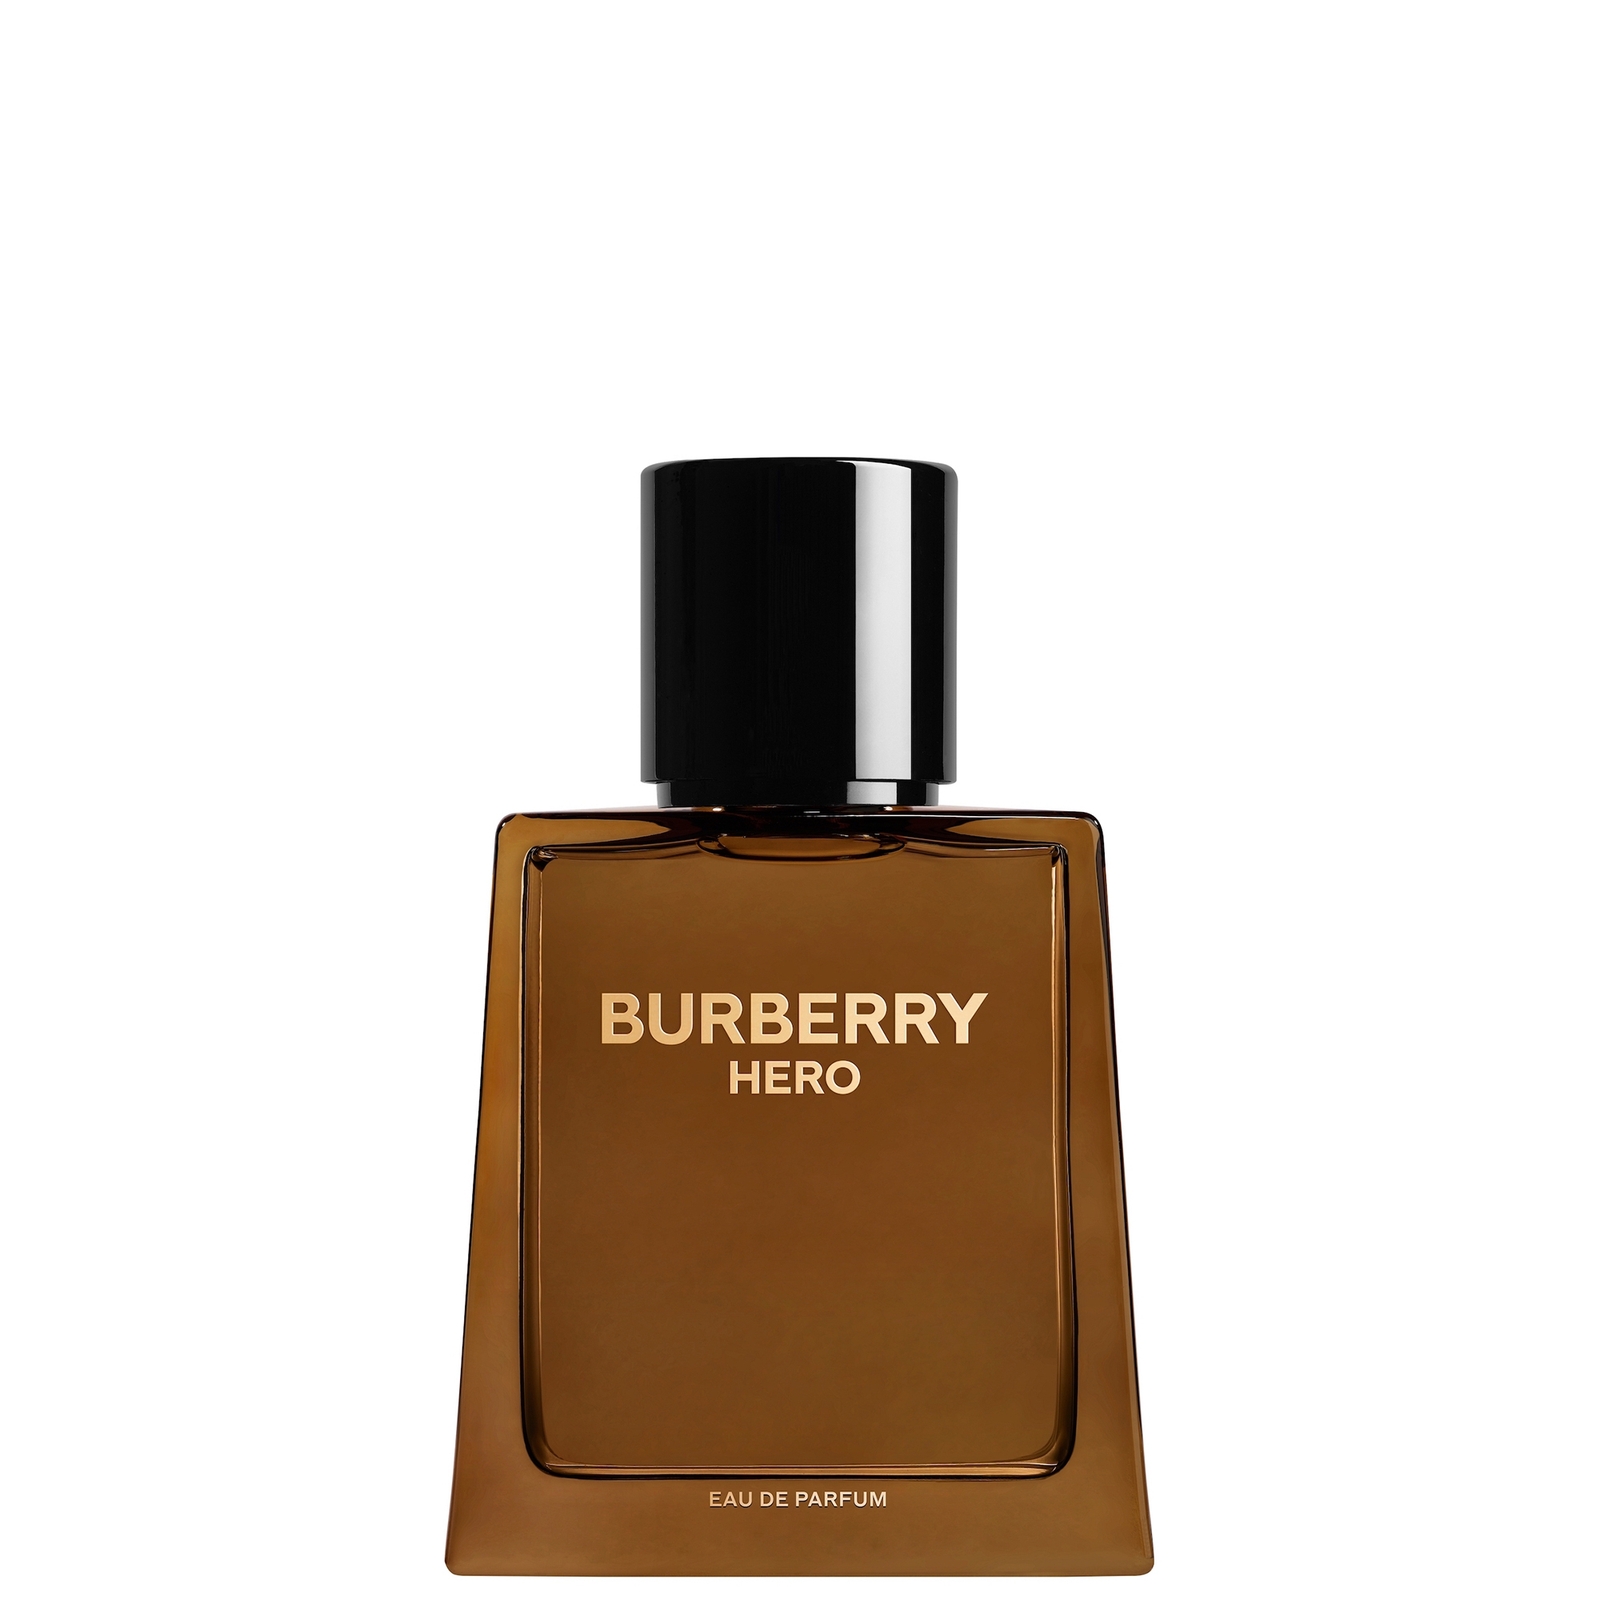 Image of Burberry Hero Eau de Parfum Profumo for Men 50ml